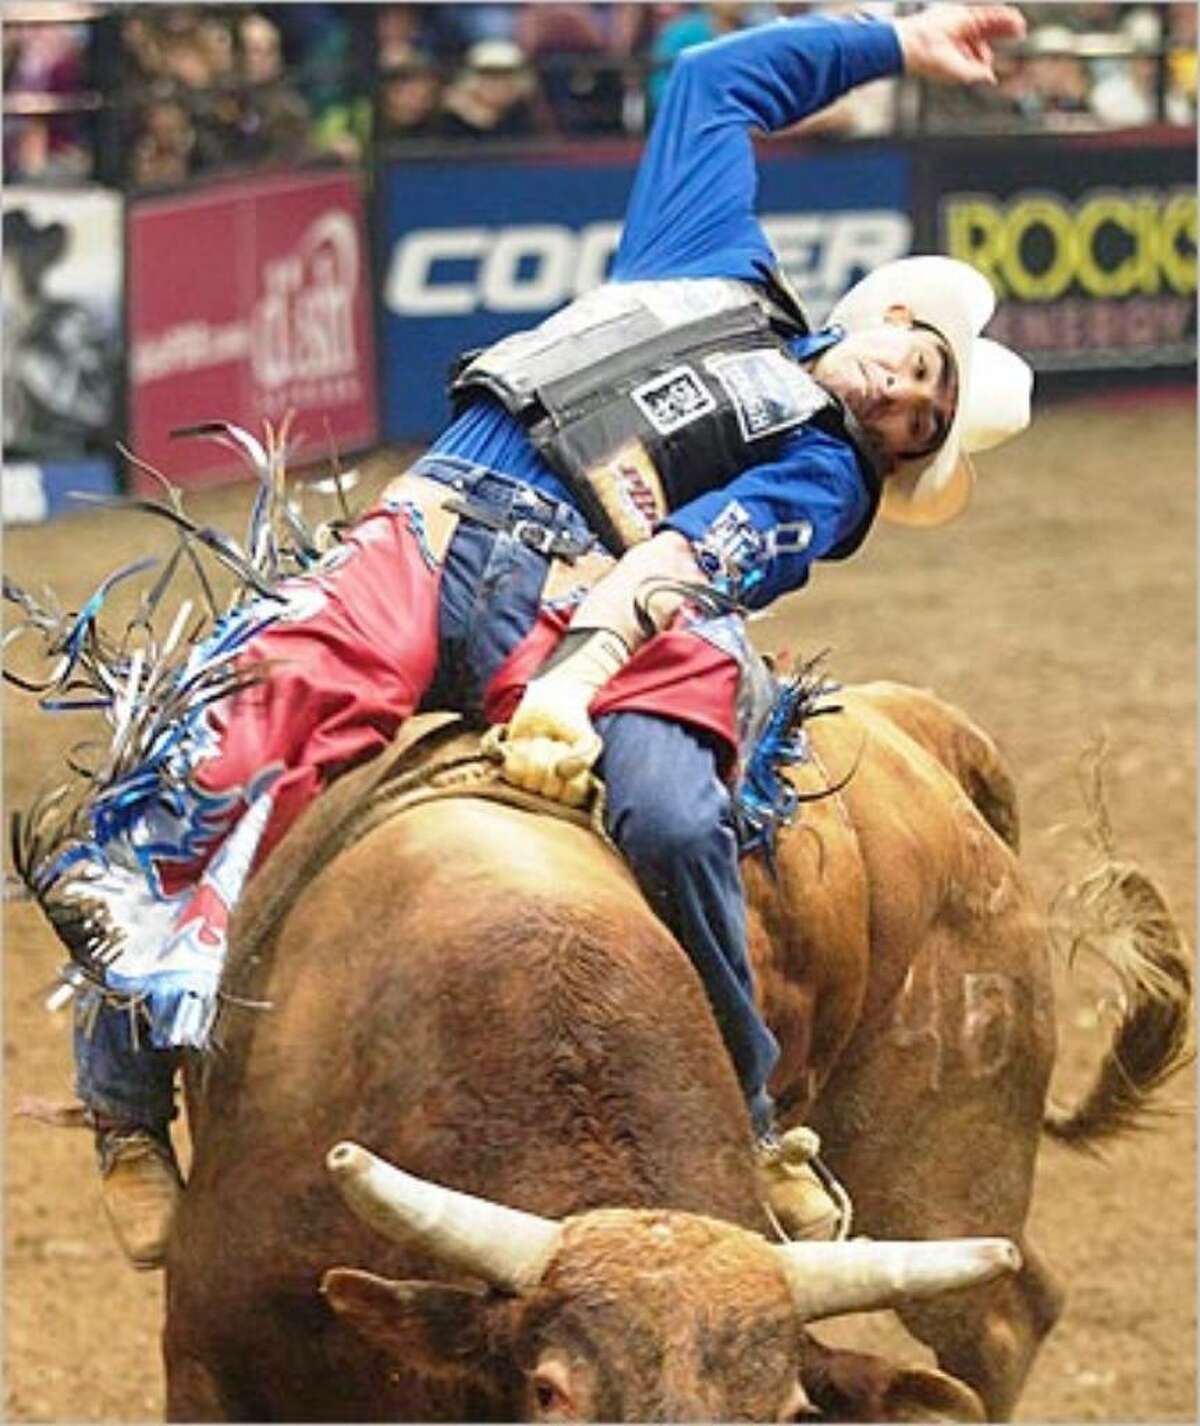 Top bull rider's secret 'Be cowboy'